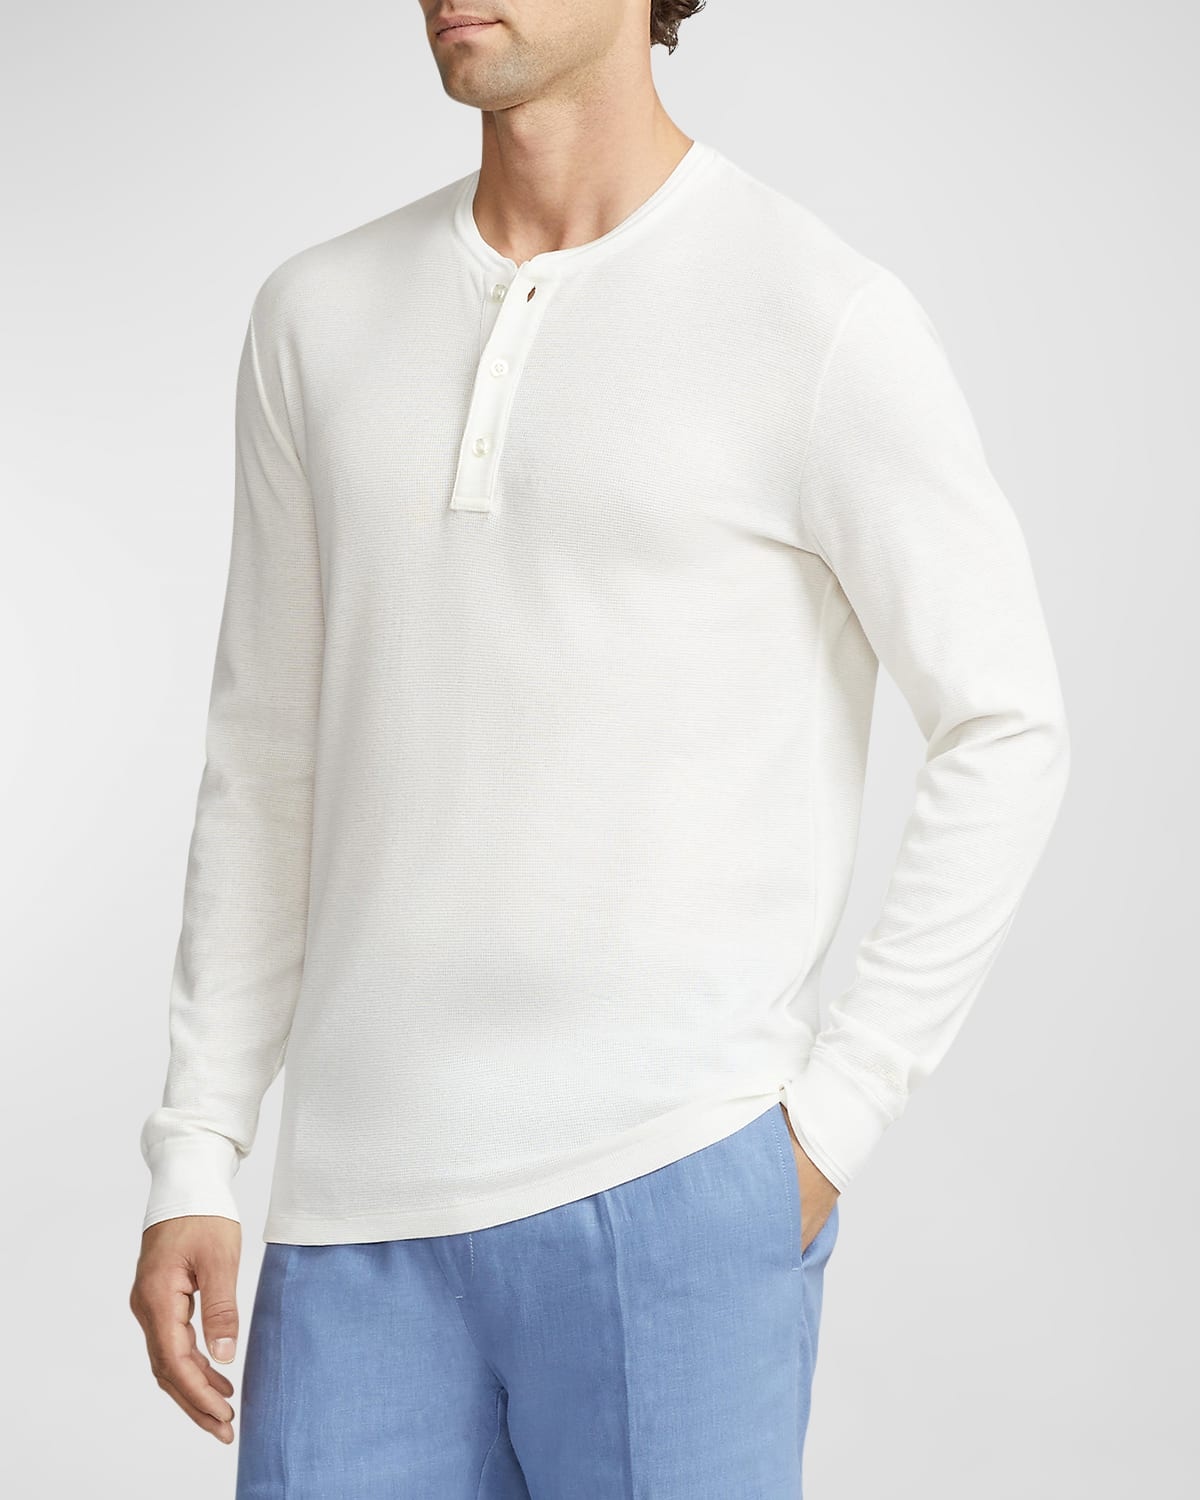 Men's Cotton and Mulberry Silk Henley Shirt - 6